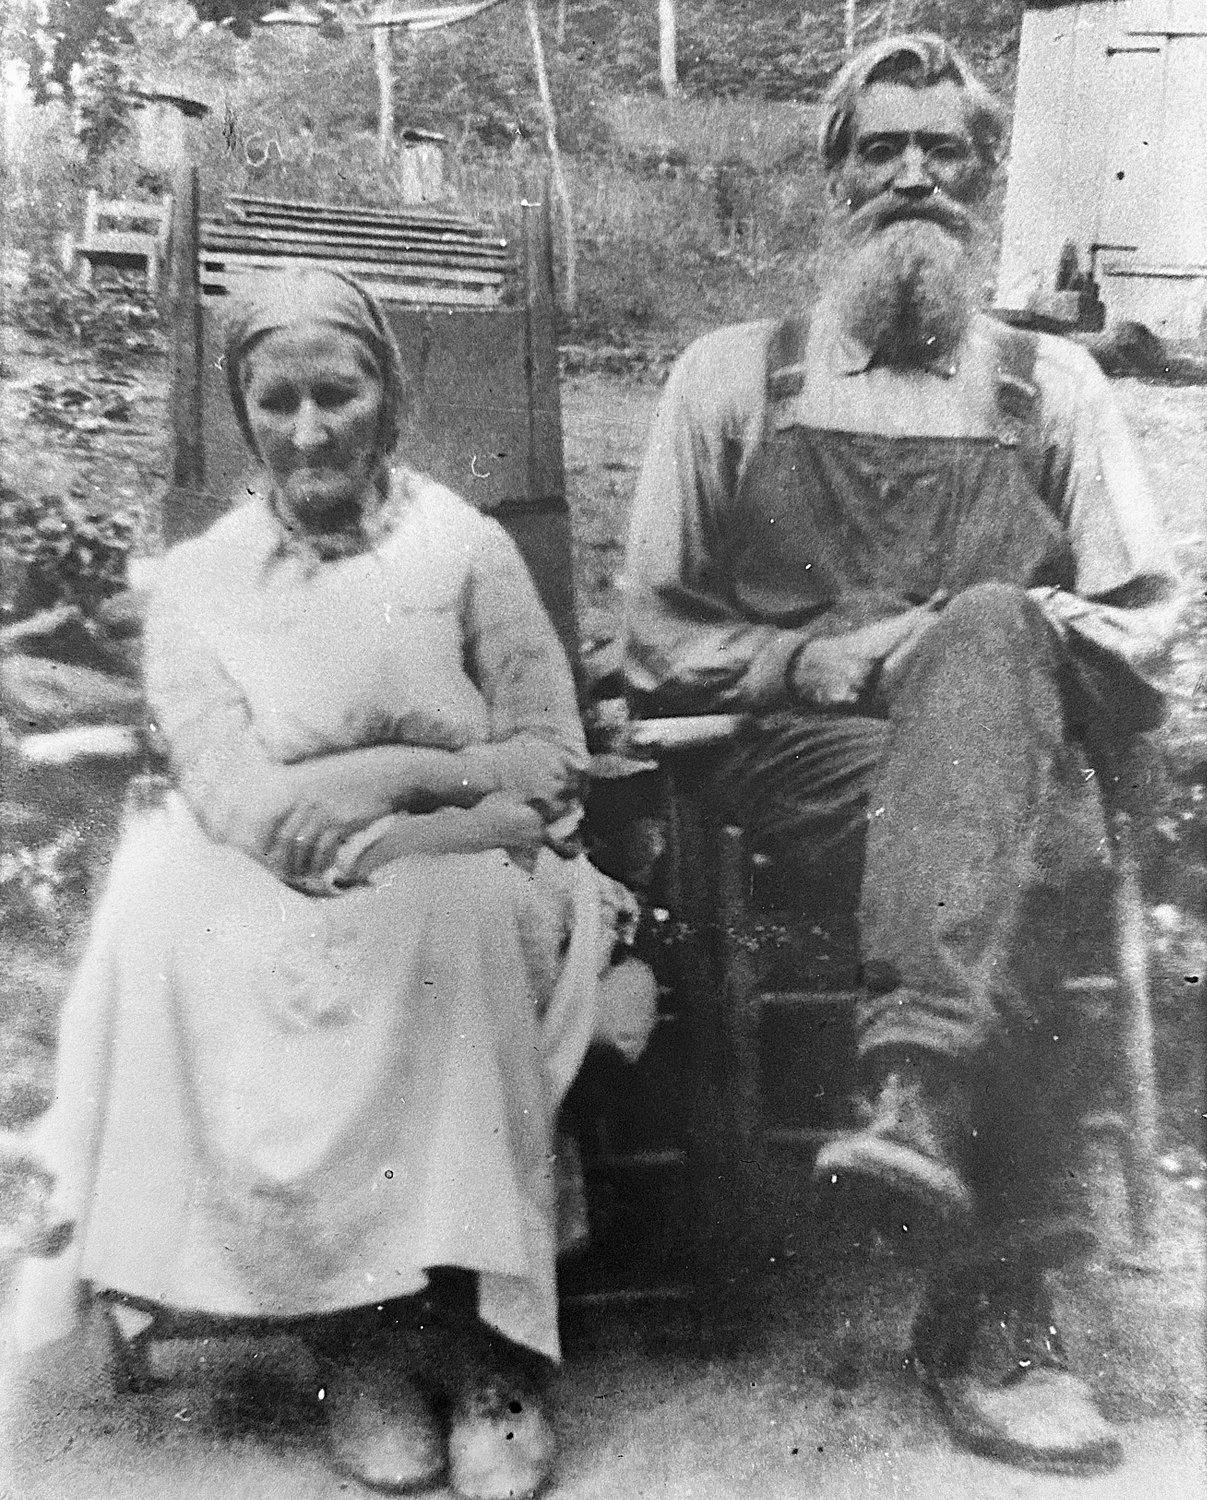 Joseph H. "Bear Joe" and Martha Lunsford raised eleven children and mountain staples on their mountain farm in Suches, Georgia.